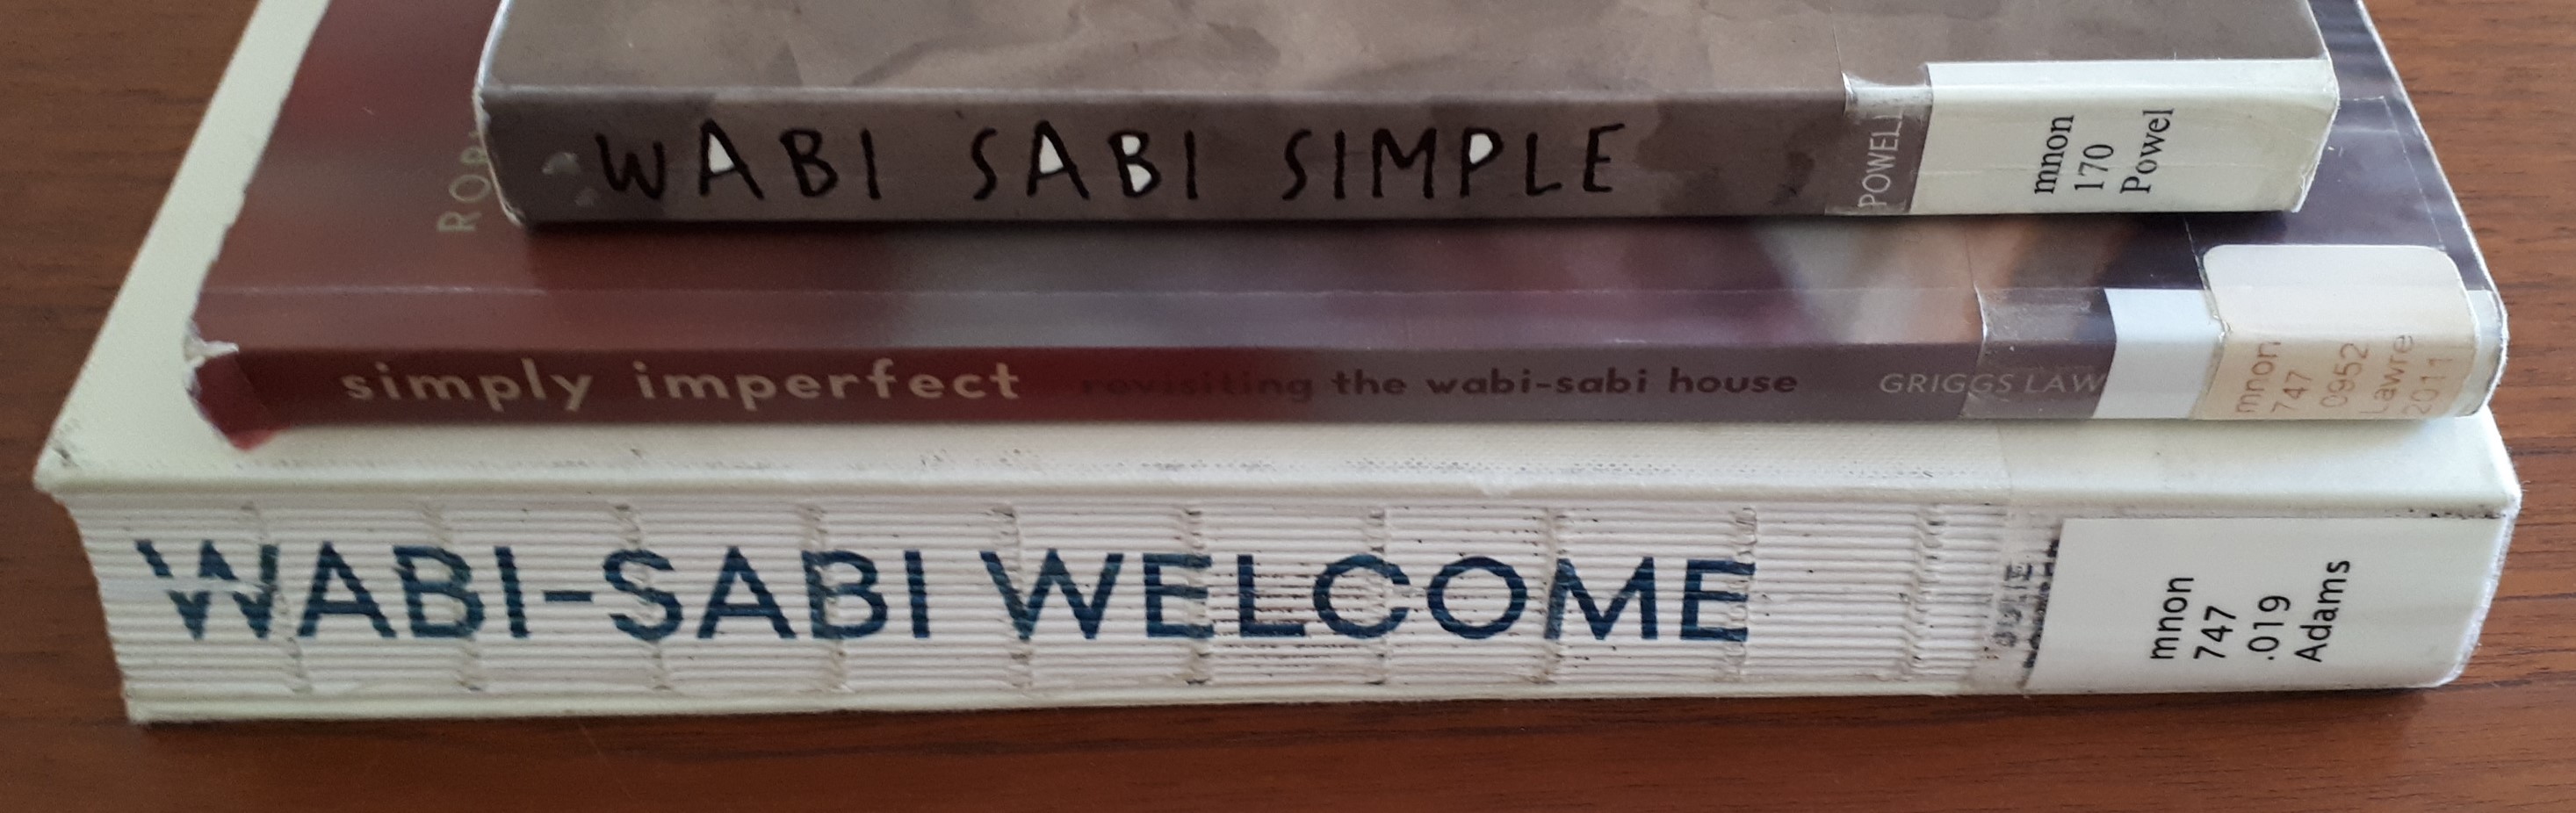 Three Books - Simply Imperfect - Wabi-Sabi Welcome - Wabi Sabi Simple - KW Professional Organizers - Library Loan